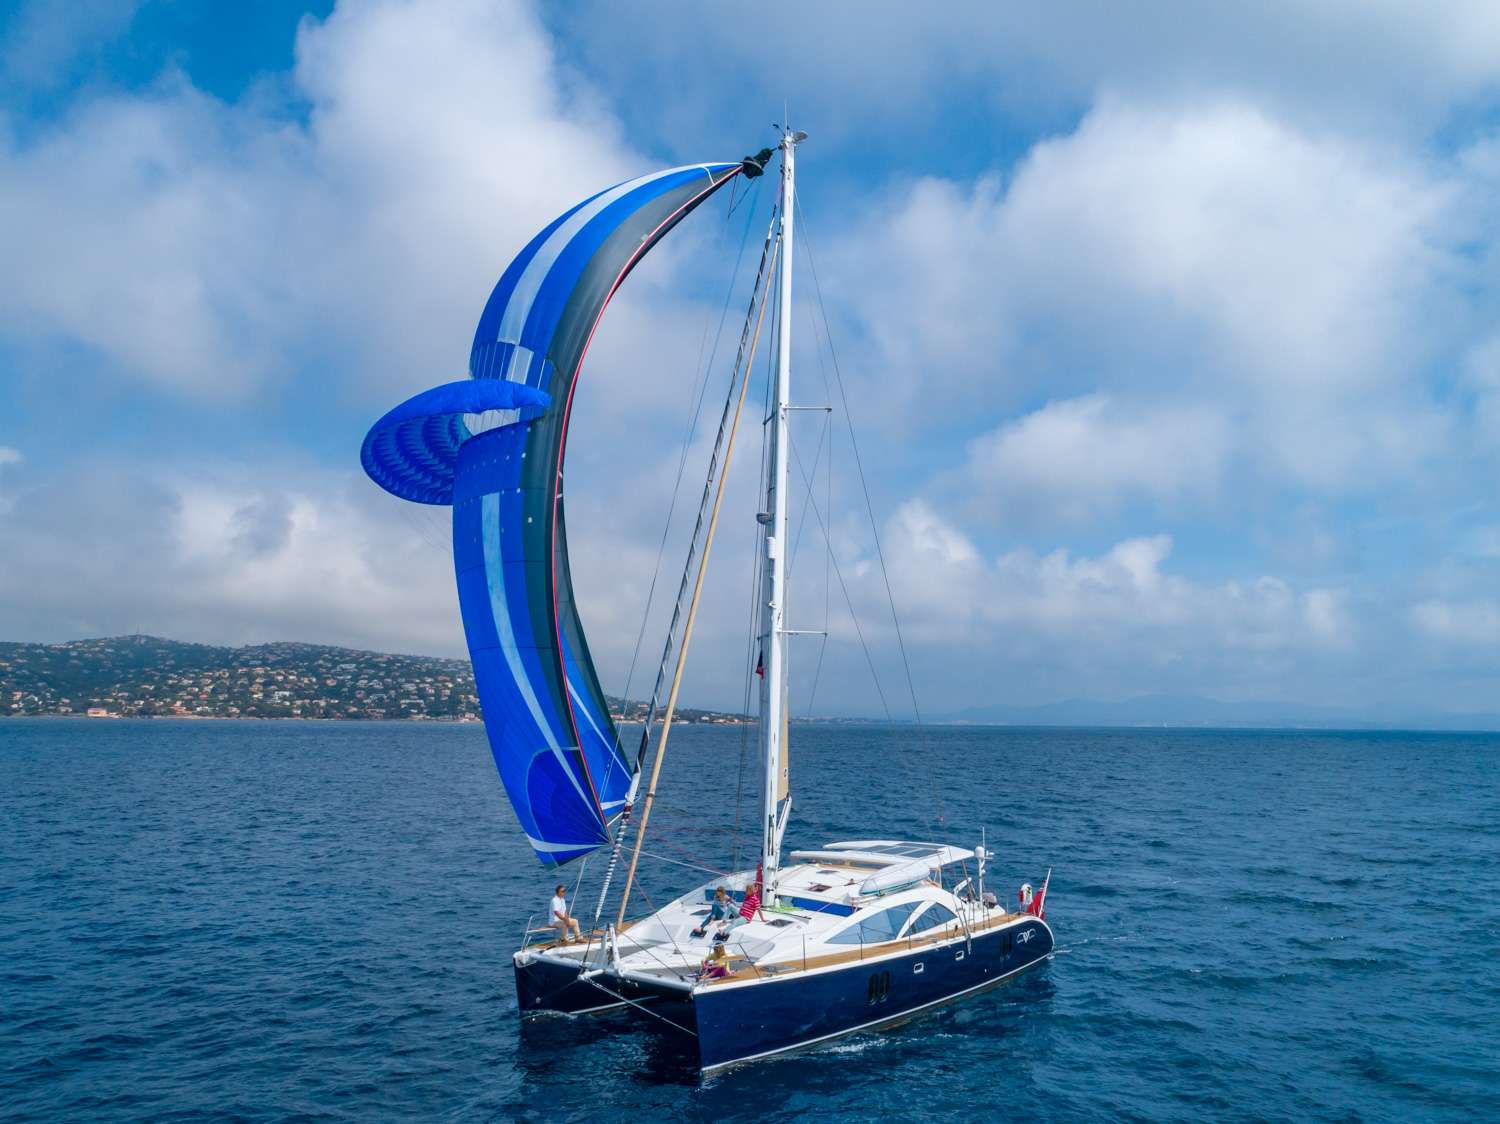 curanta cridhe - Yacht Charter Antibes & Boat hire in Fr. Riviera & Tyrrhenian Sea 1